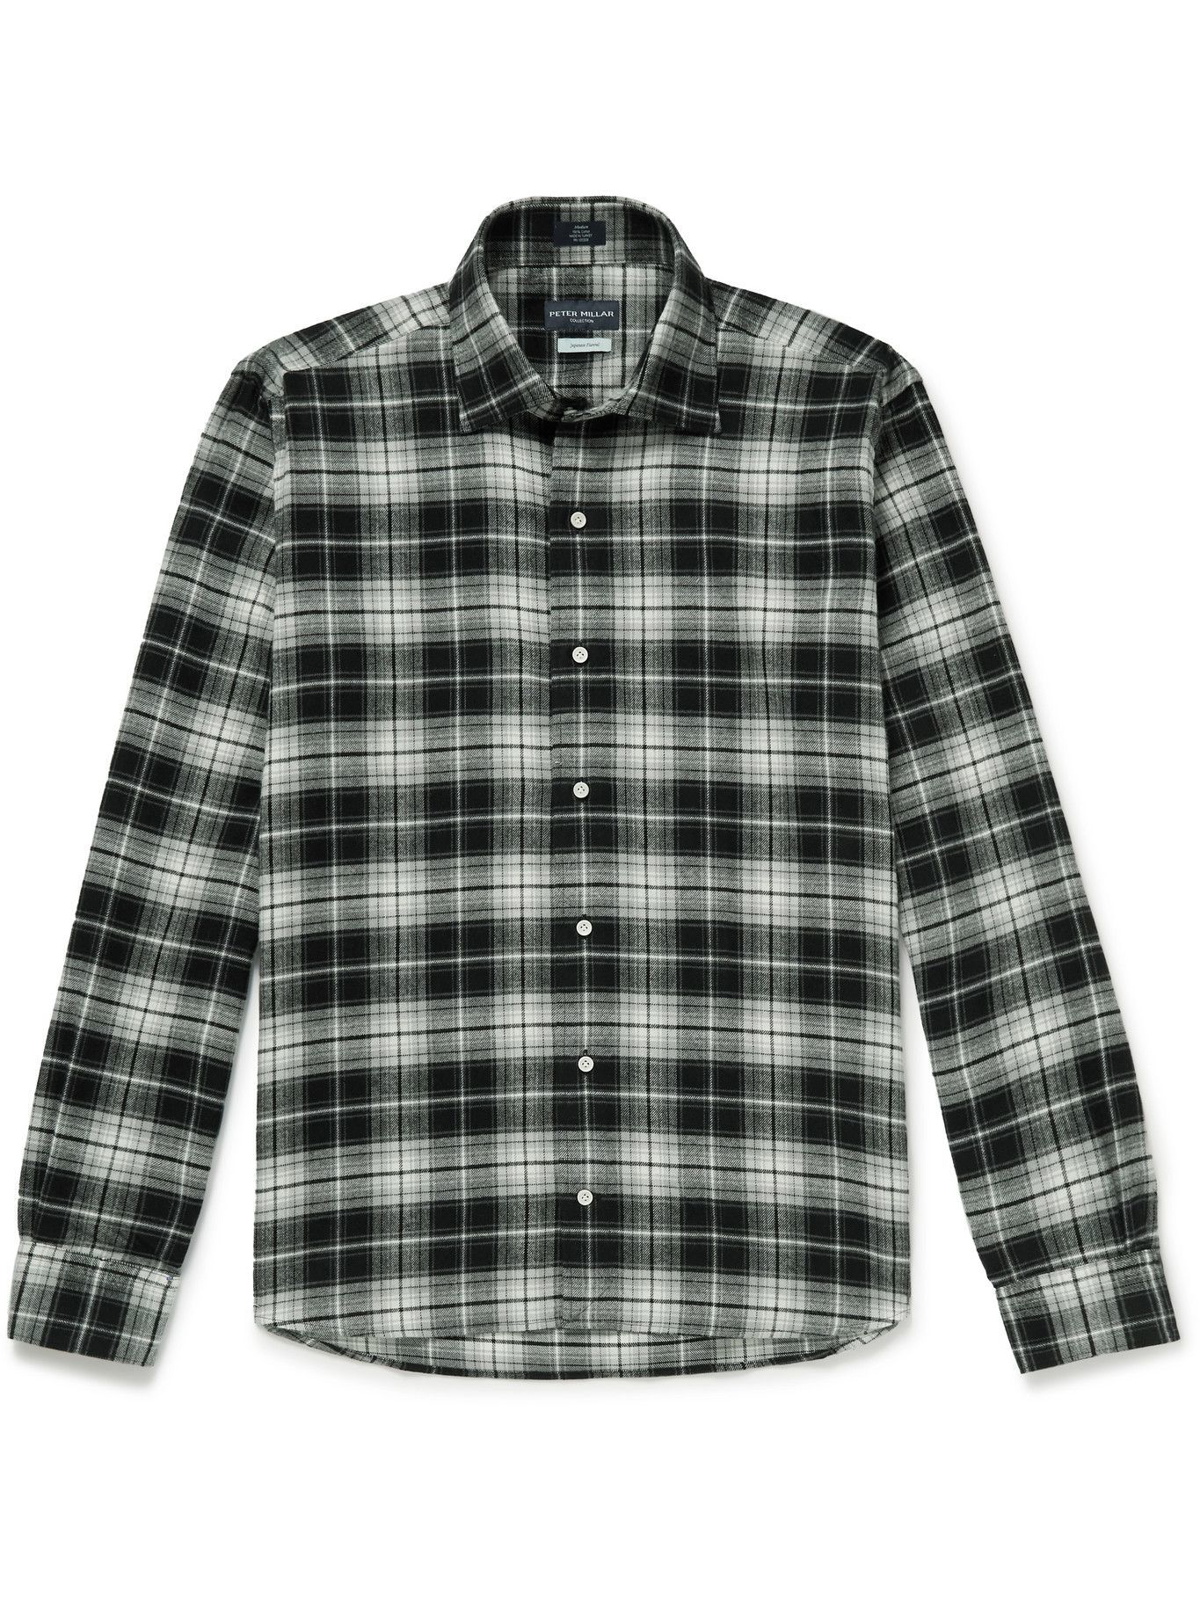 Peter Millar - Checked Cotton-Flannel Shirt - Black Peter Millar